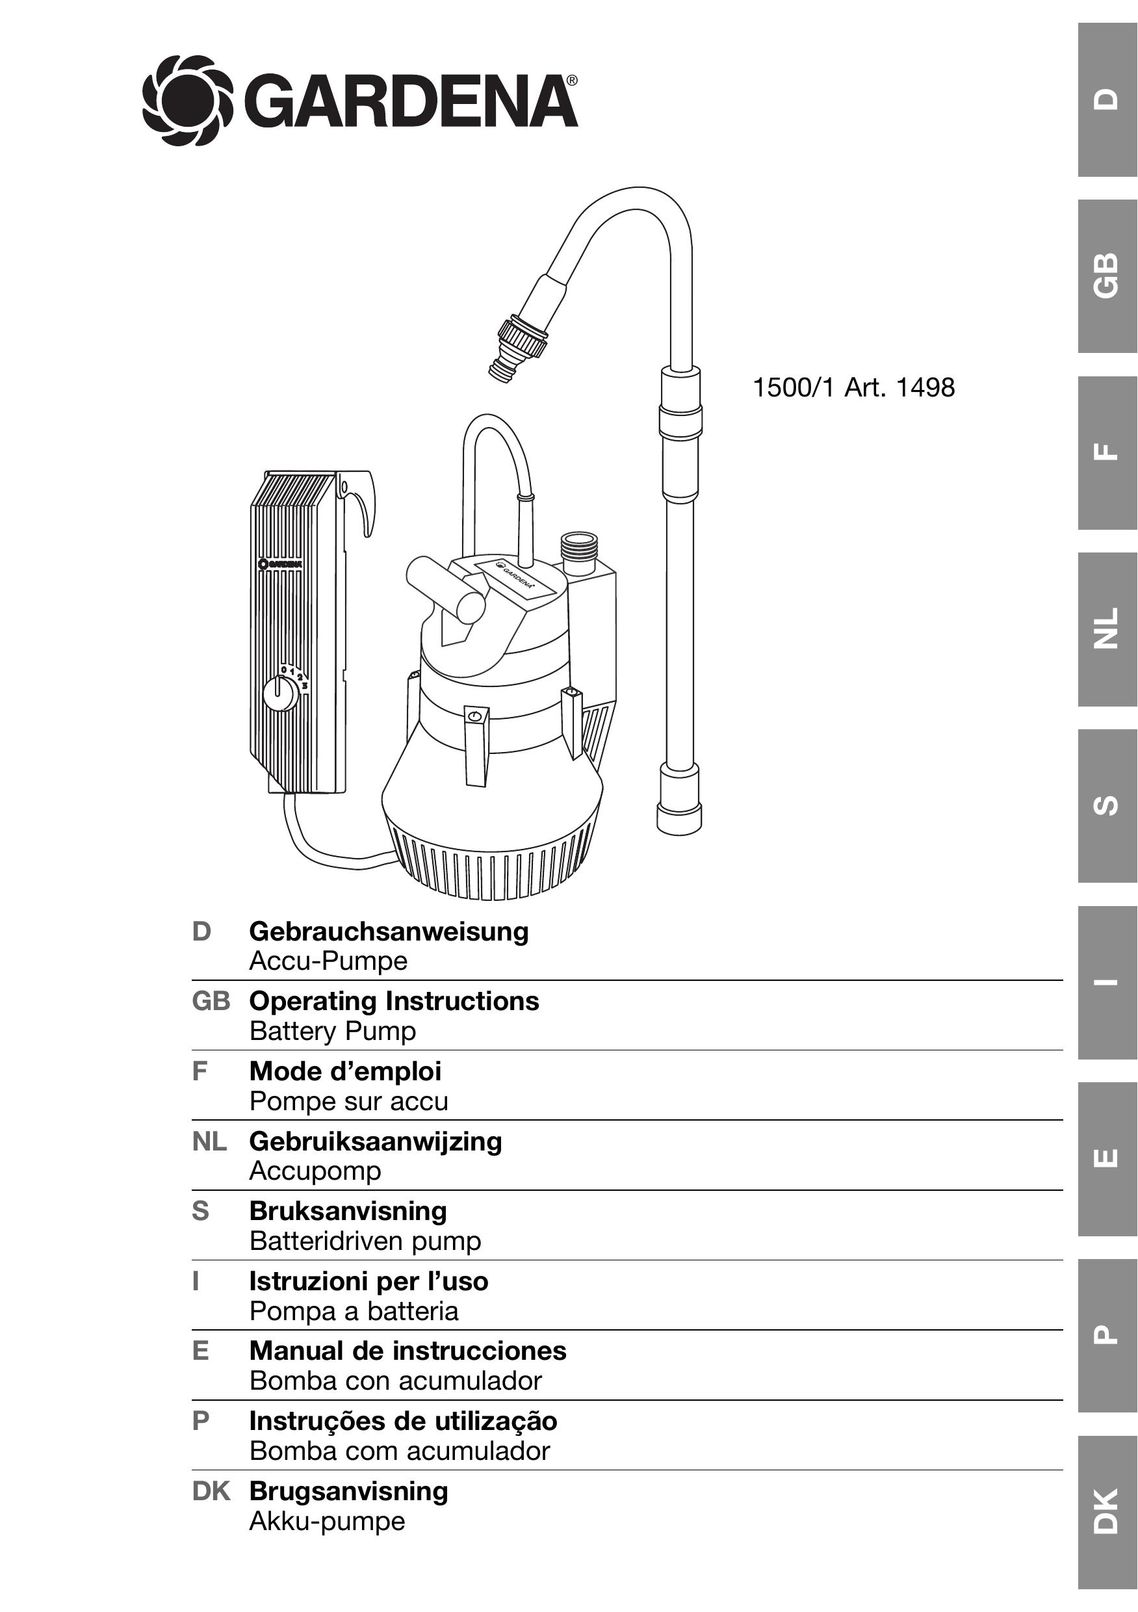 Gardena 1500/1 Art. 1498 Heat Pump User Manual